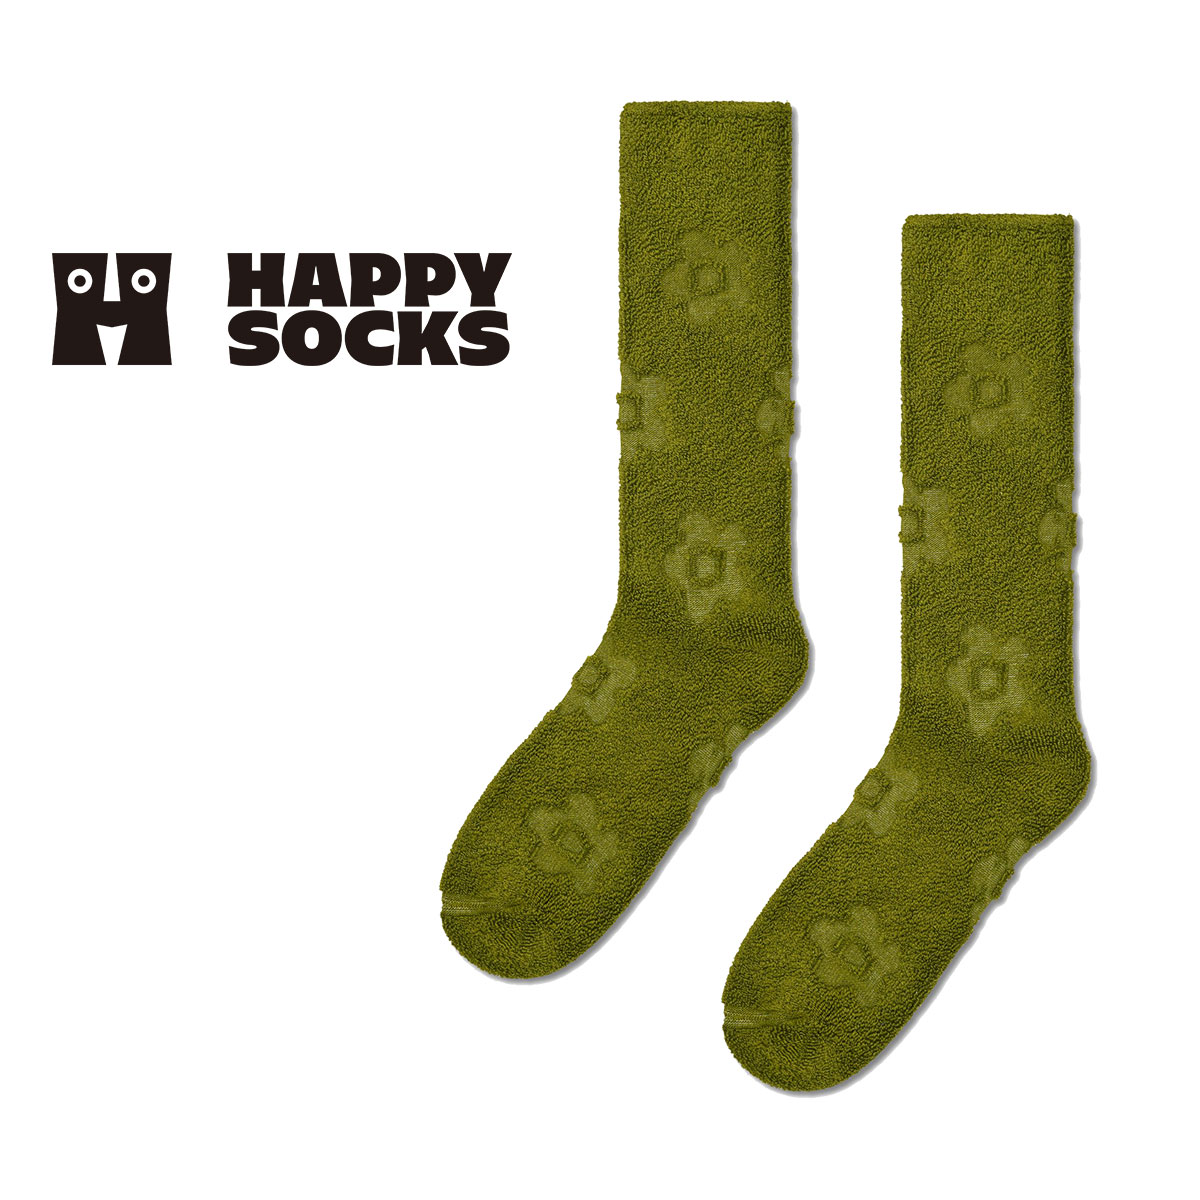 Happy Socks ハッピーソックス Fluffy Flower （ フラッフィー フラワー ）クルー丈 ソックス 靴下 ユニセックス メンズ ＆ レディース